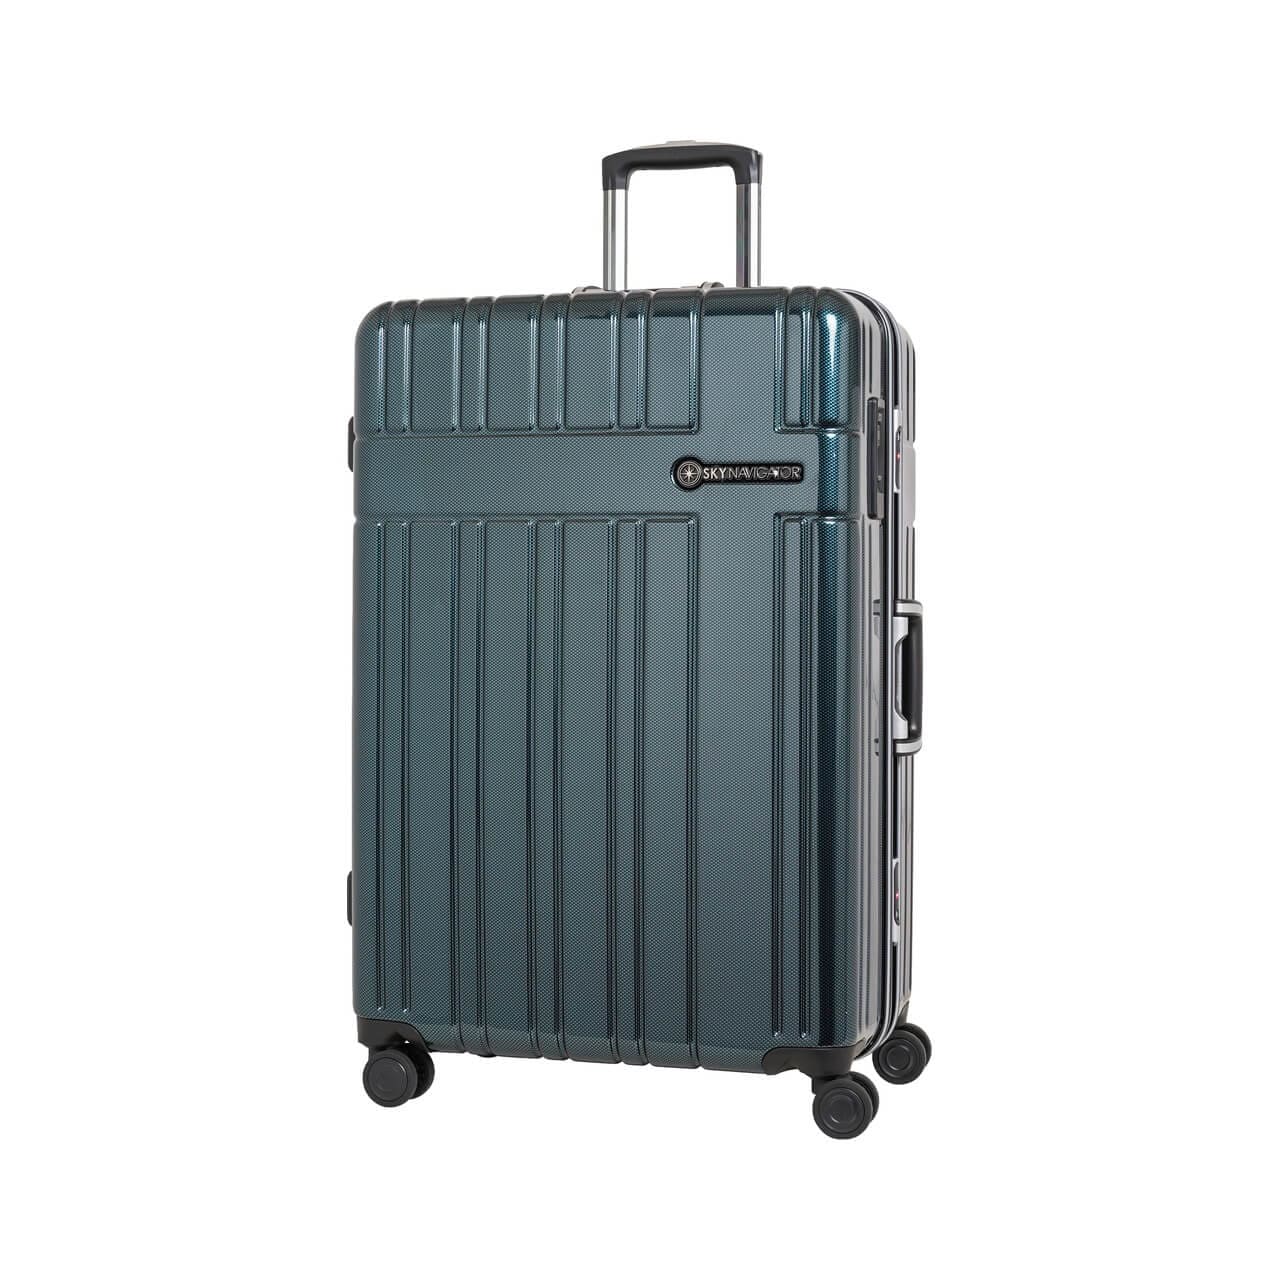 SKYNAVIGATORのスーツケースSK-0835-69のグリーンカーボンの正面振り画像